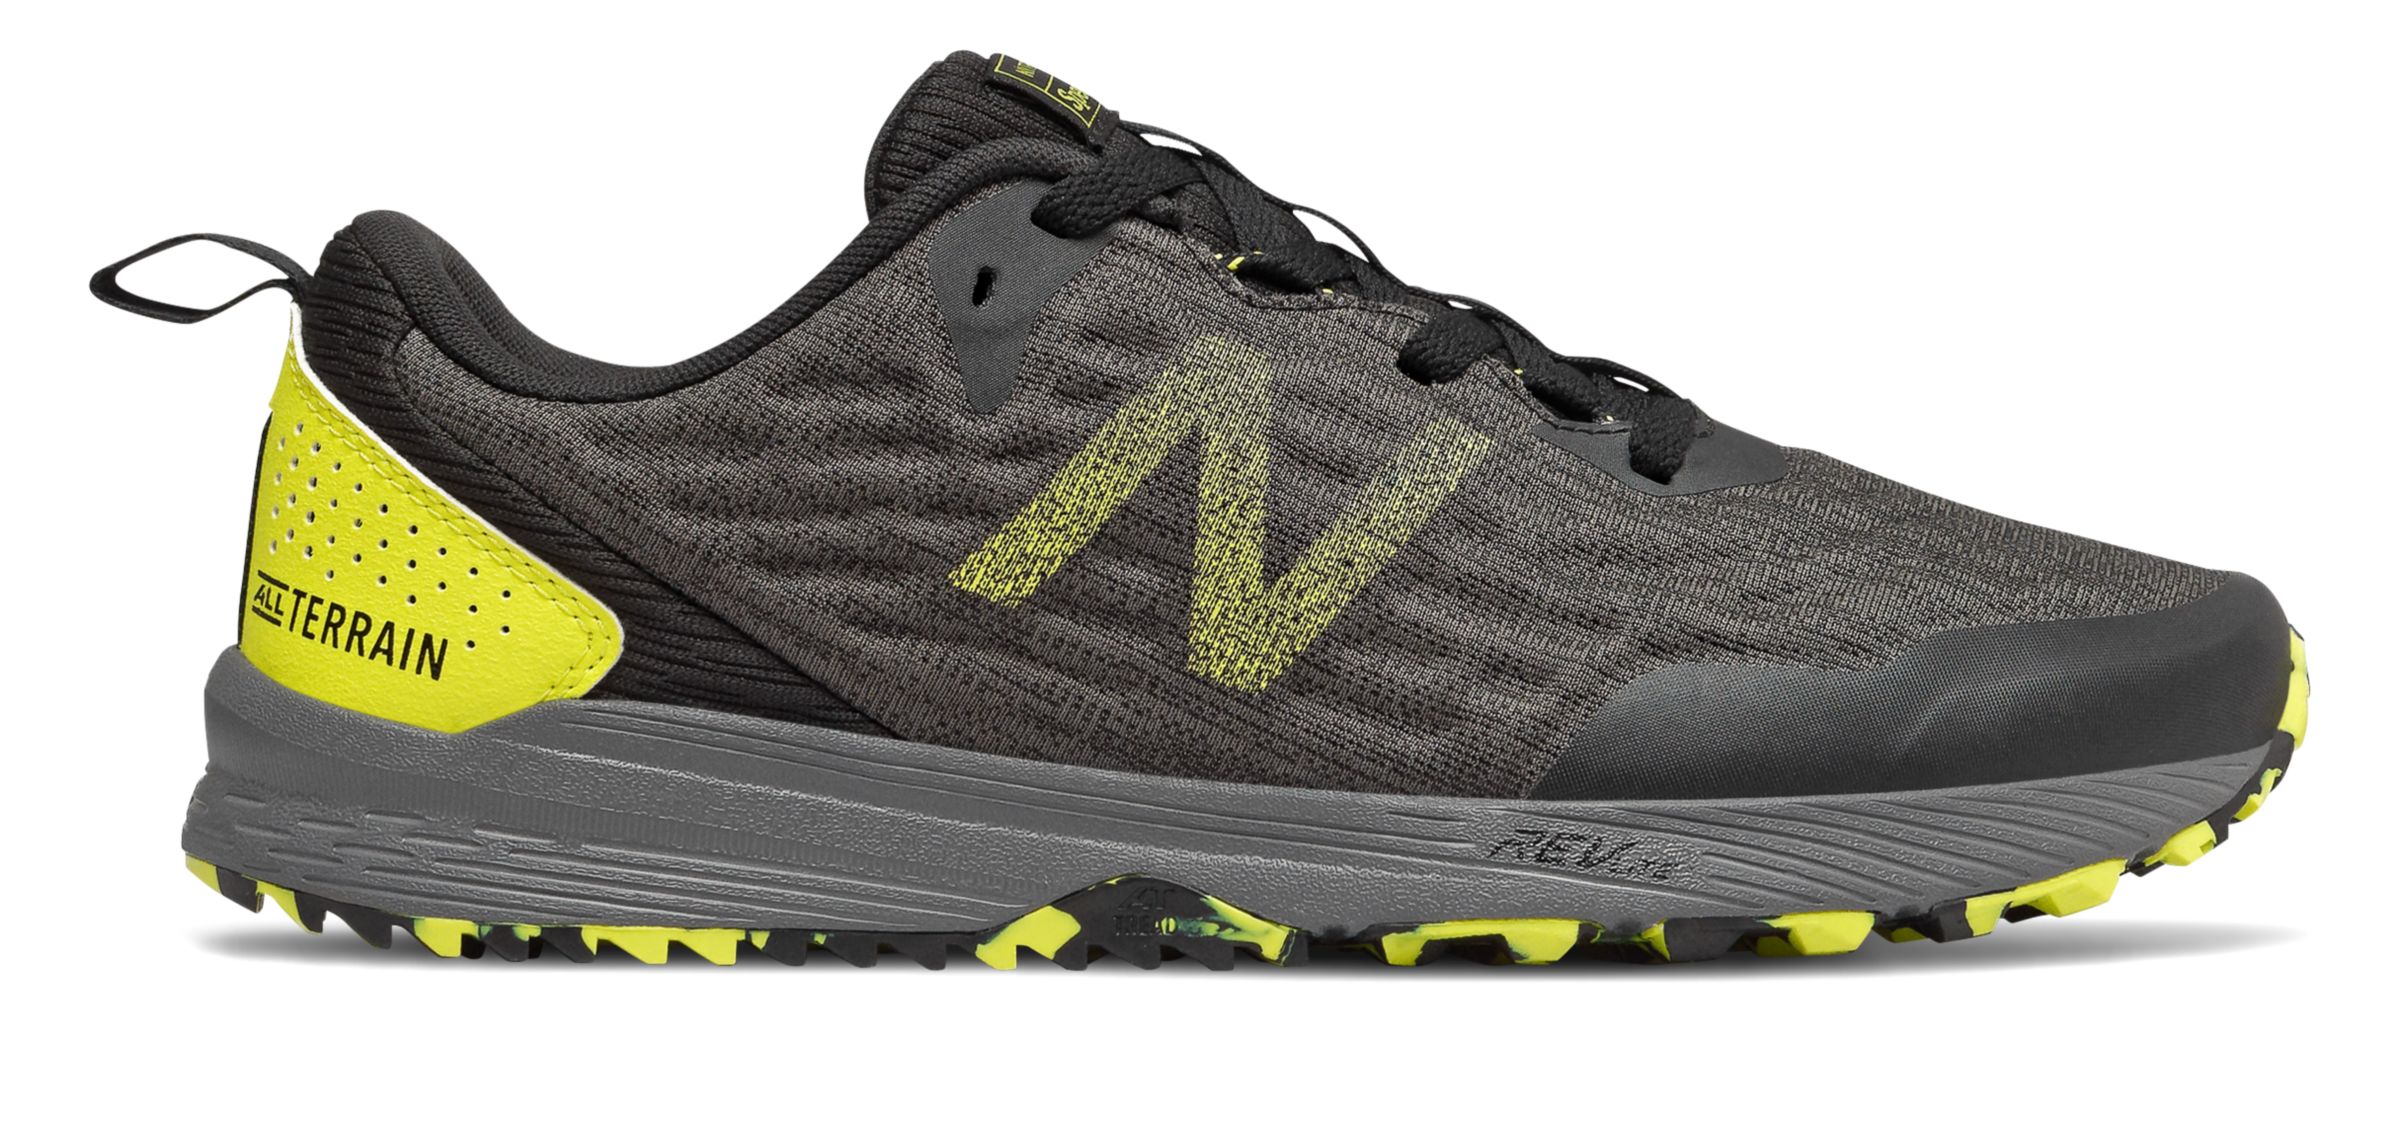 Men's NITREL v3 Trail Running Shoes - New Balance